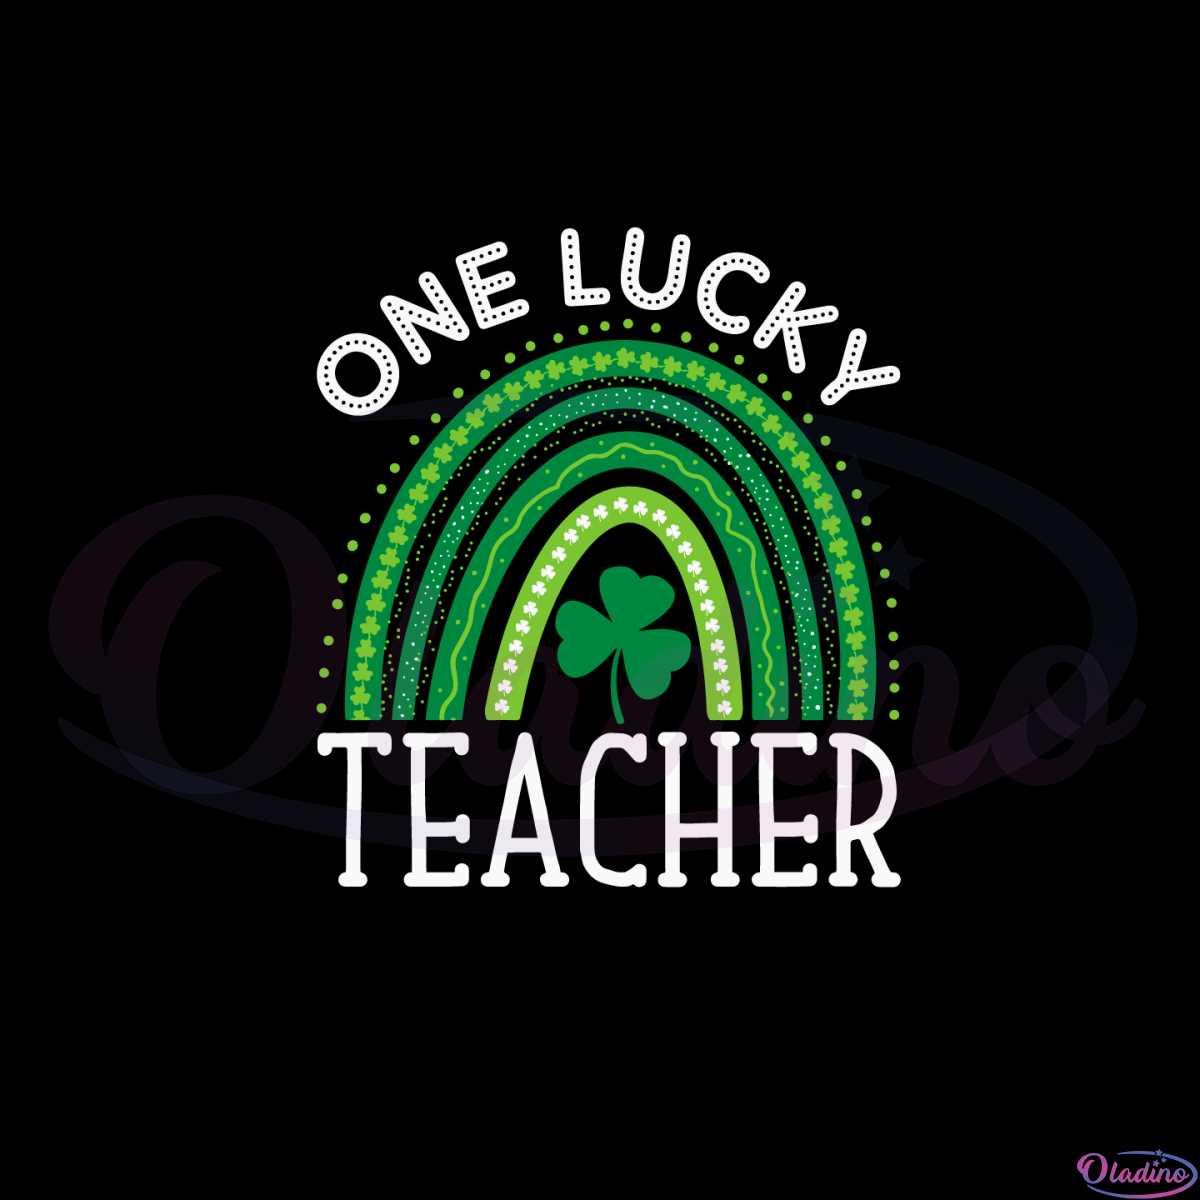 one-lucky-teacher-shamrock-rainbow-svg-graphic-designs-files